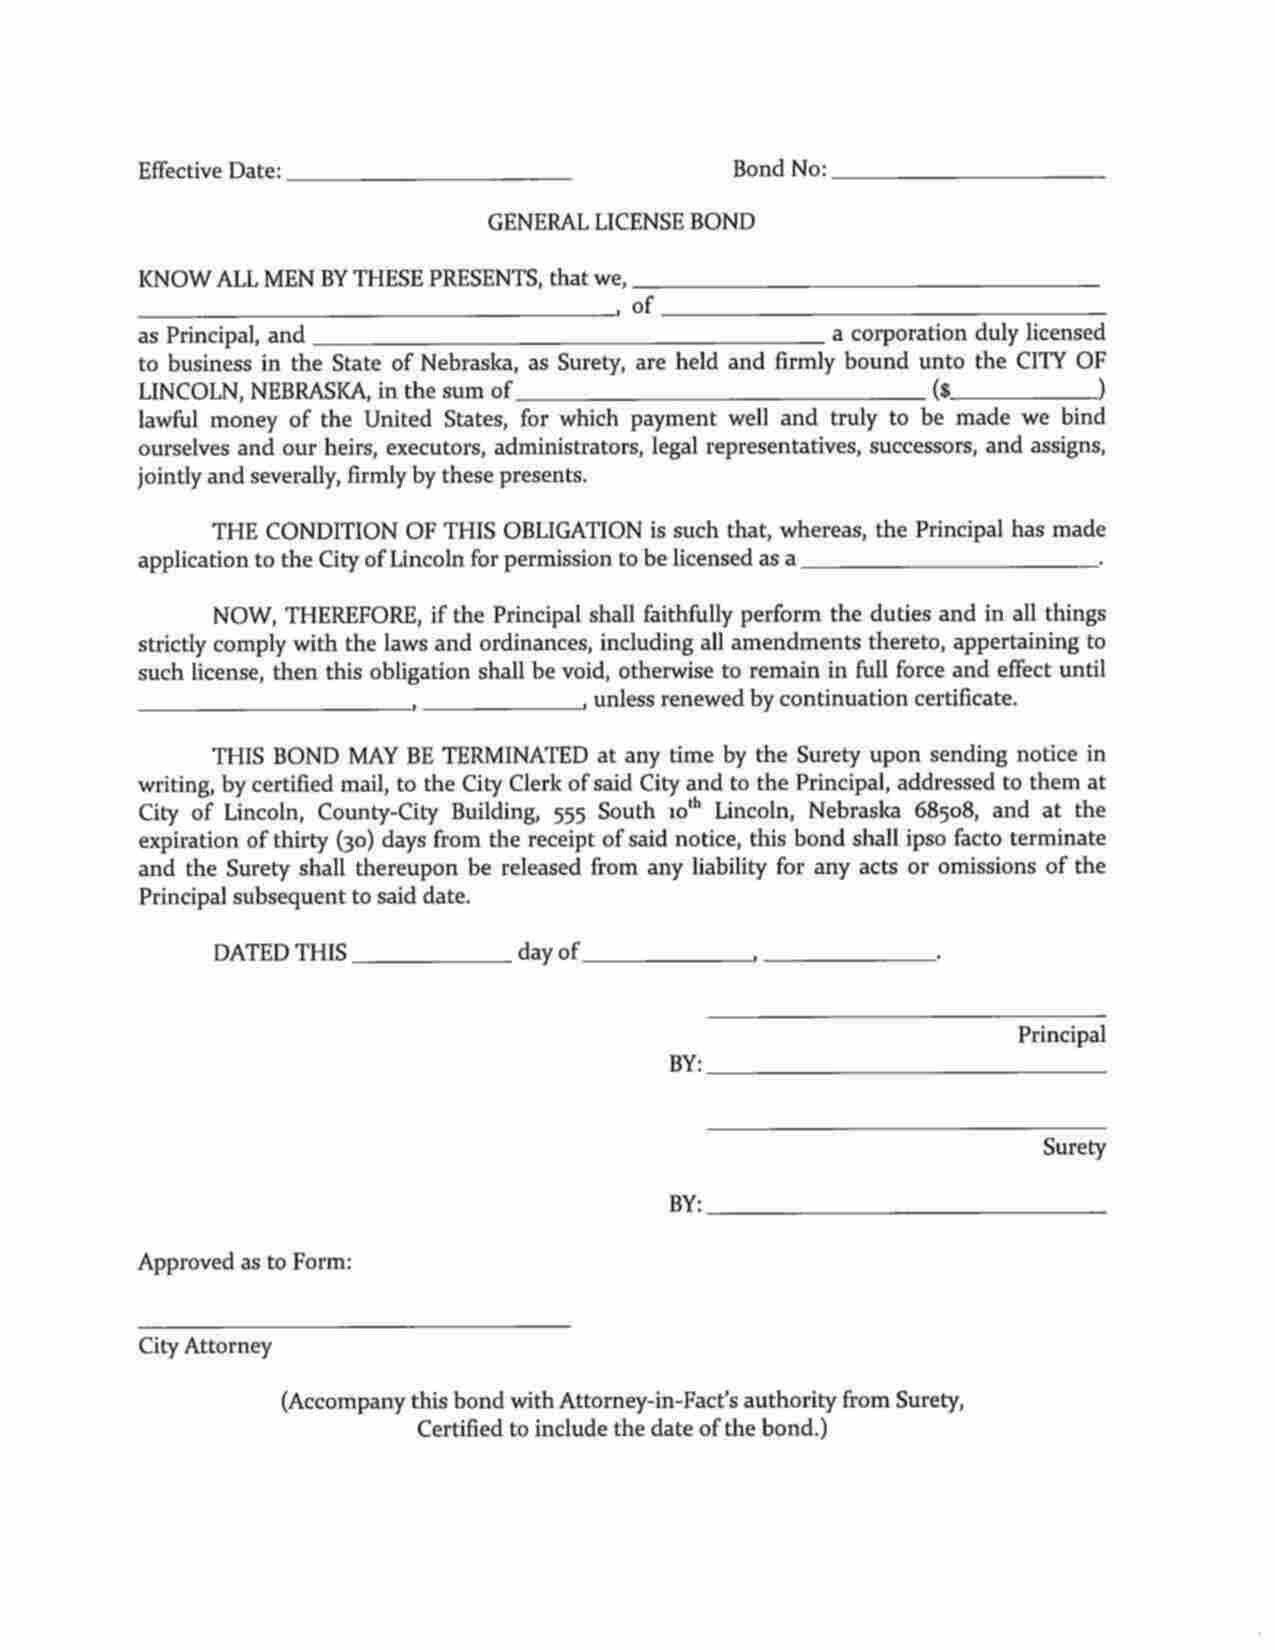 Nebraska General License Bond Form